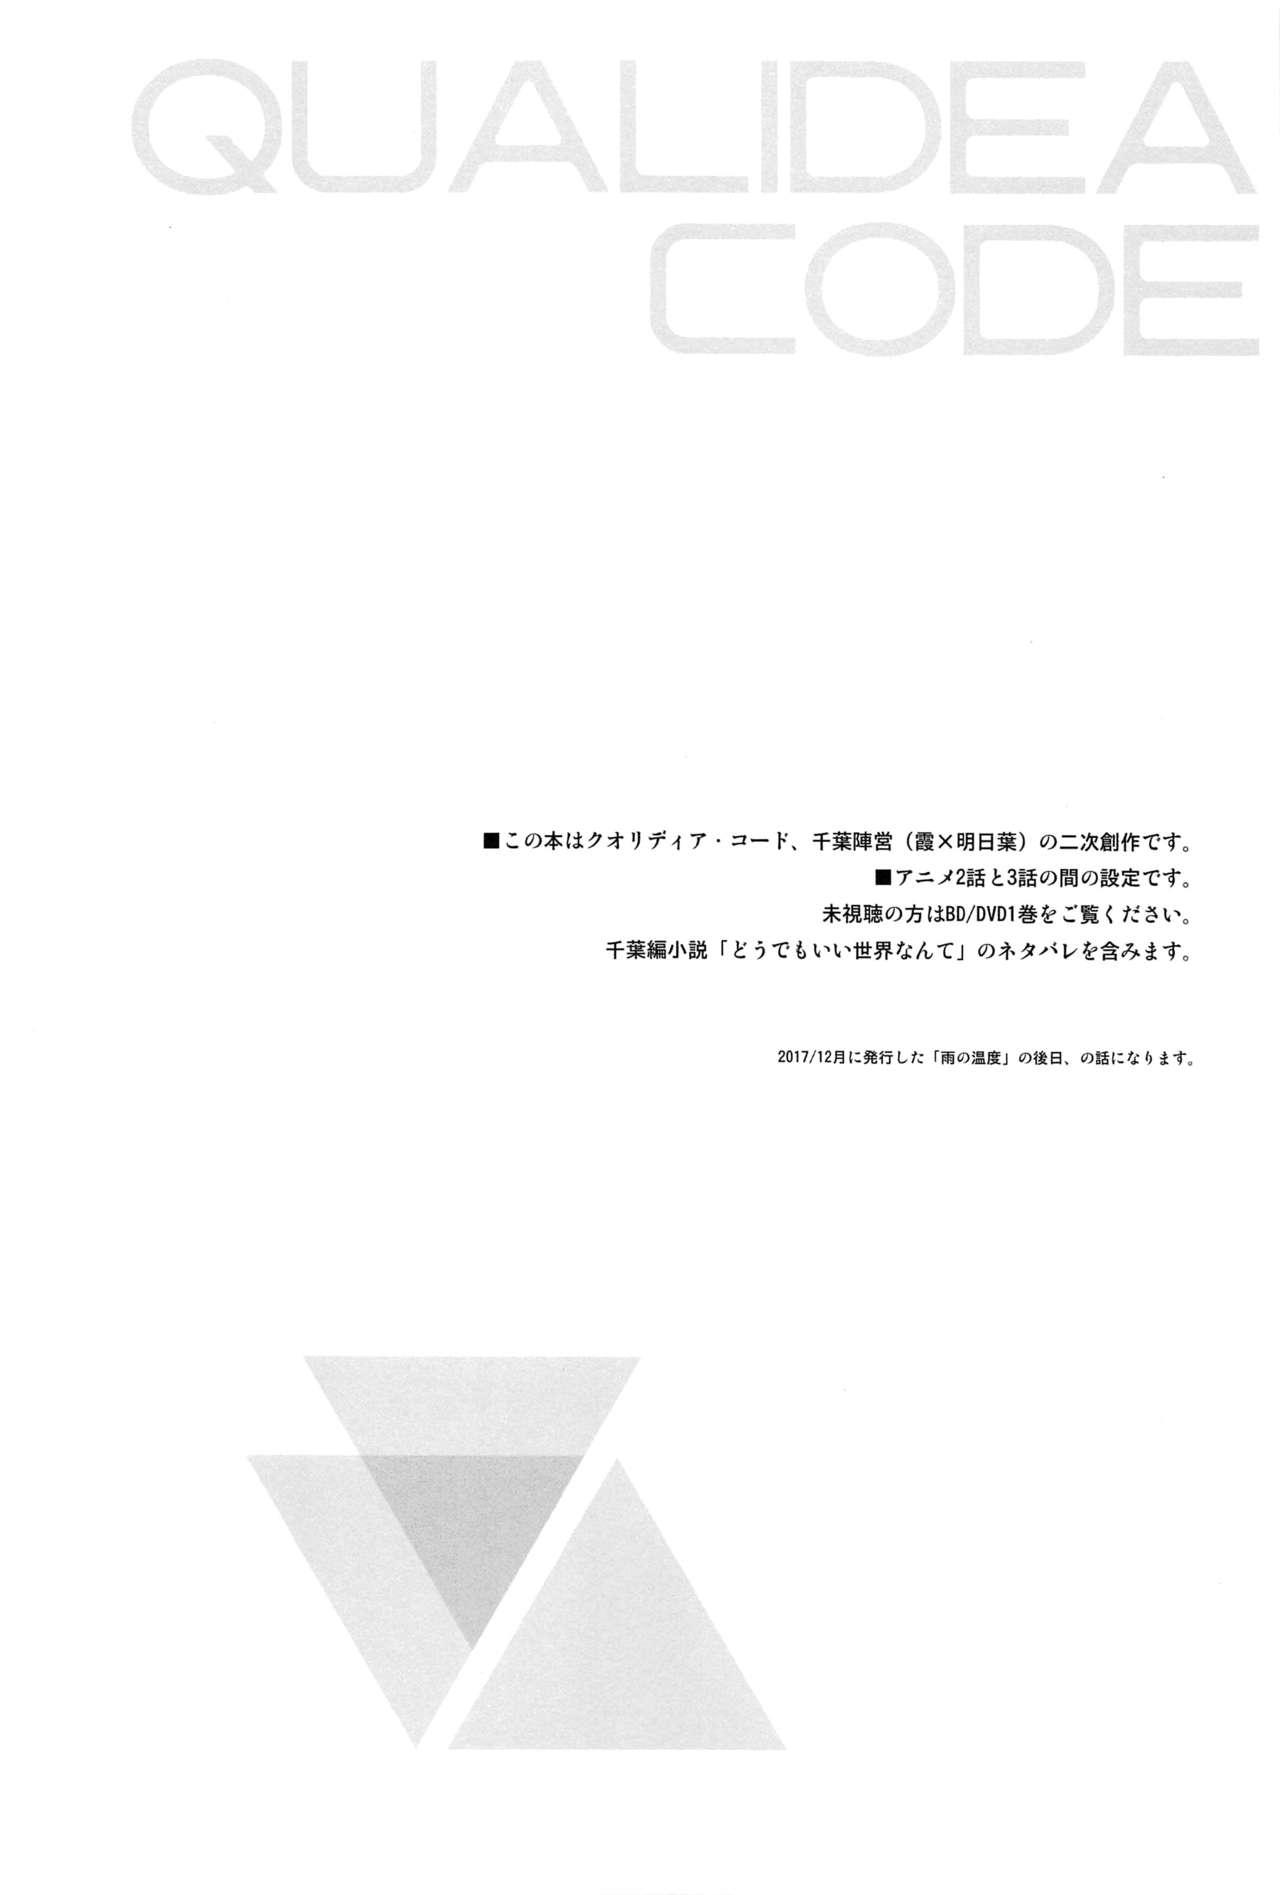 Boys Kono Sekai no Owari made - Qualidea code Lesbians - Page 4